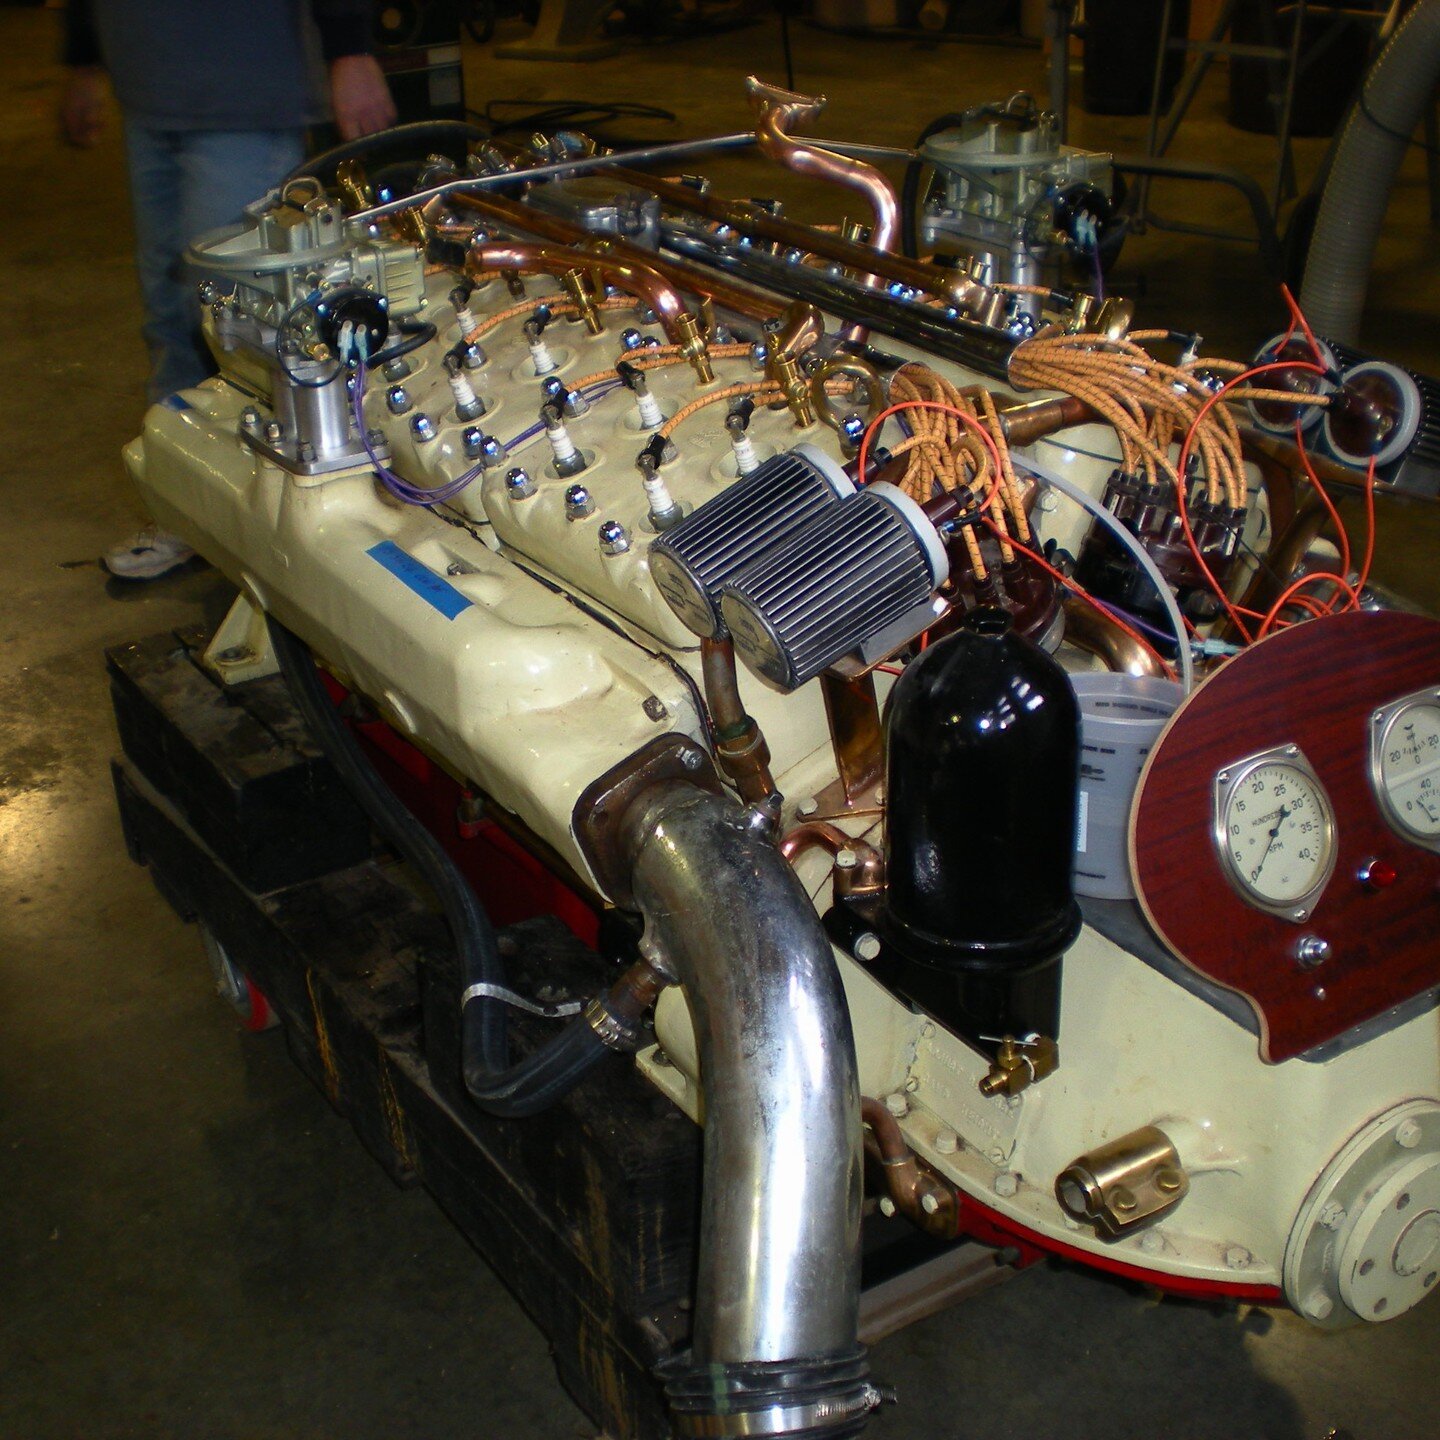 Scripps engine on the run stand.